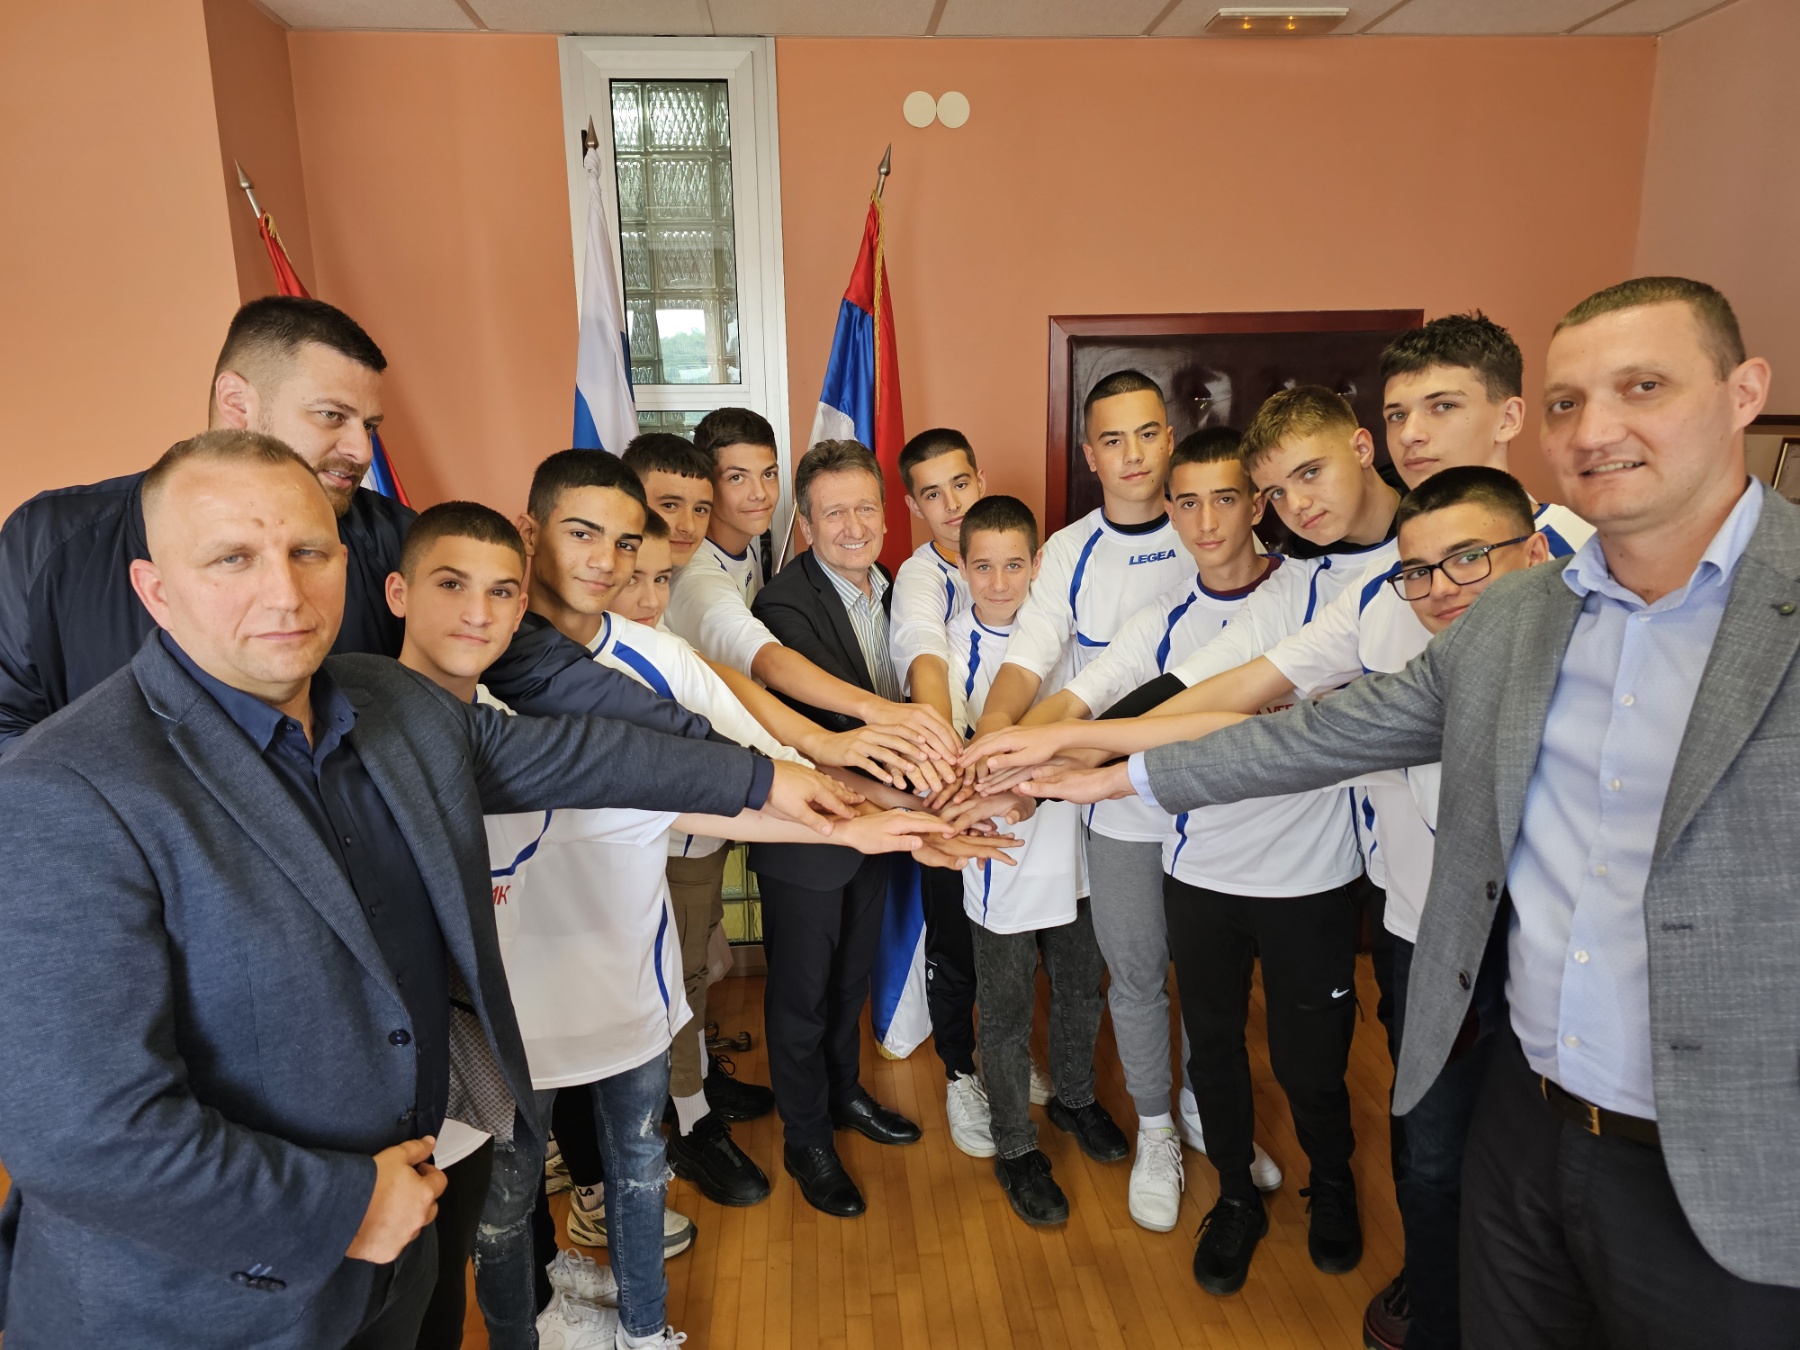 Načelnik Perić darovao male fudbalere ŠAMPIONE regije: “JURIŠ” NA VRH REPUBLIKE SRPSKE